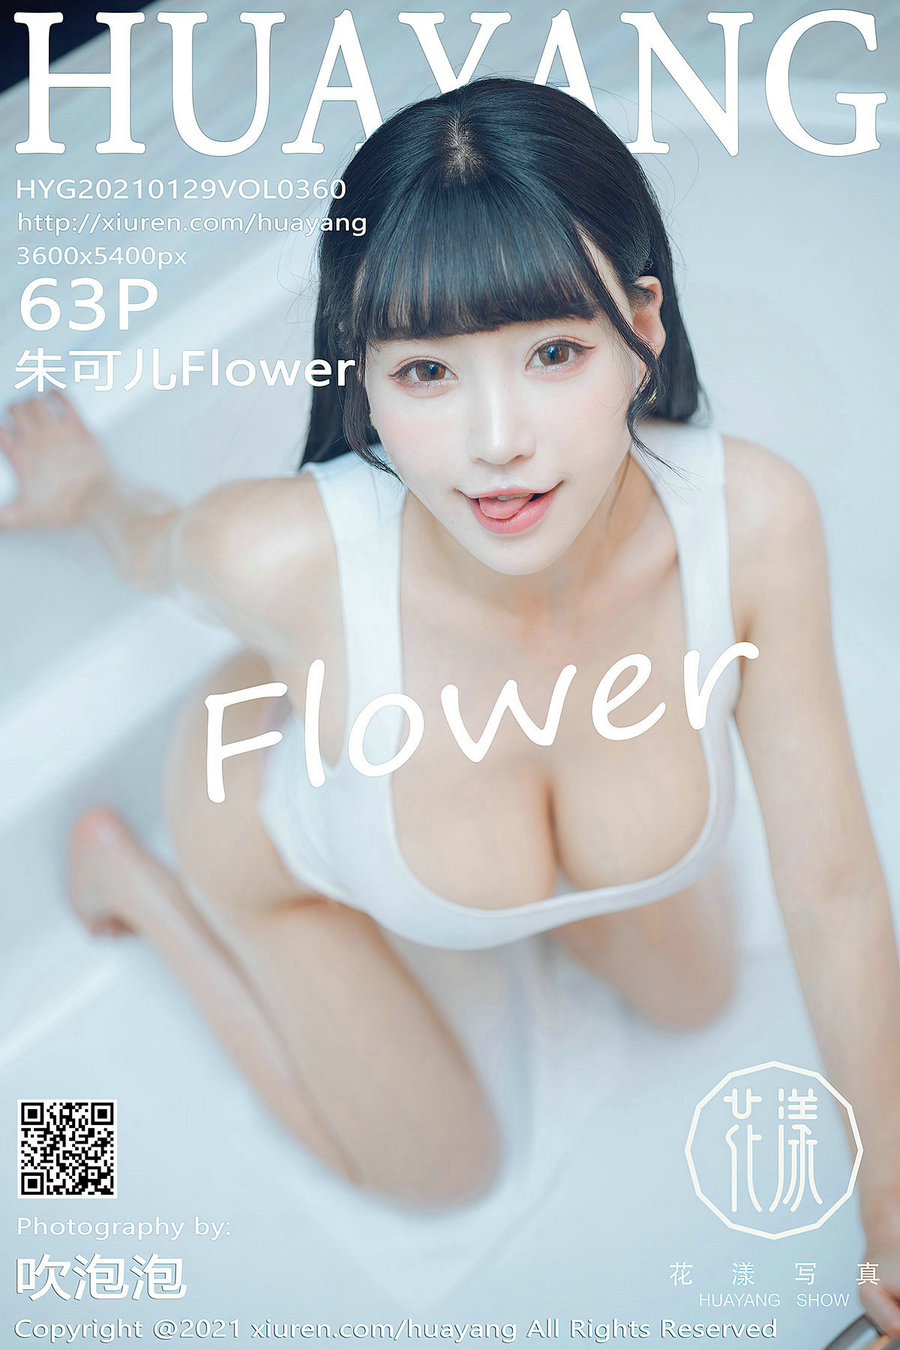 [HuaYang]花漾 2021.01.29 Vol.360 朱可儿Flower [63P560MB]